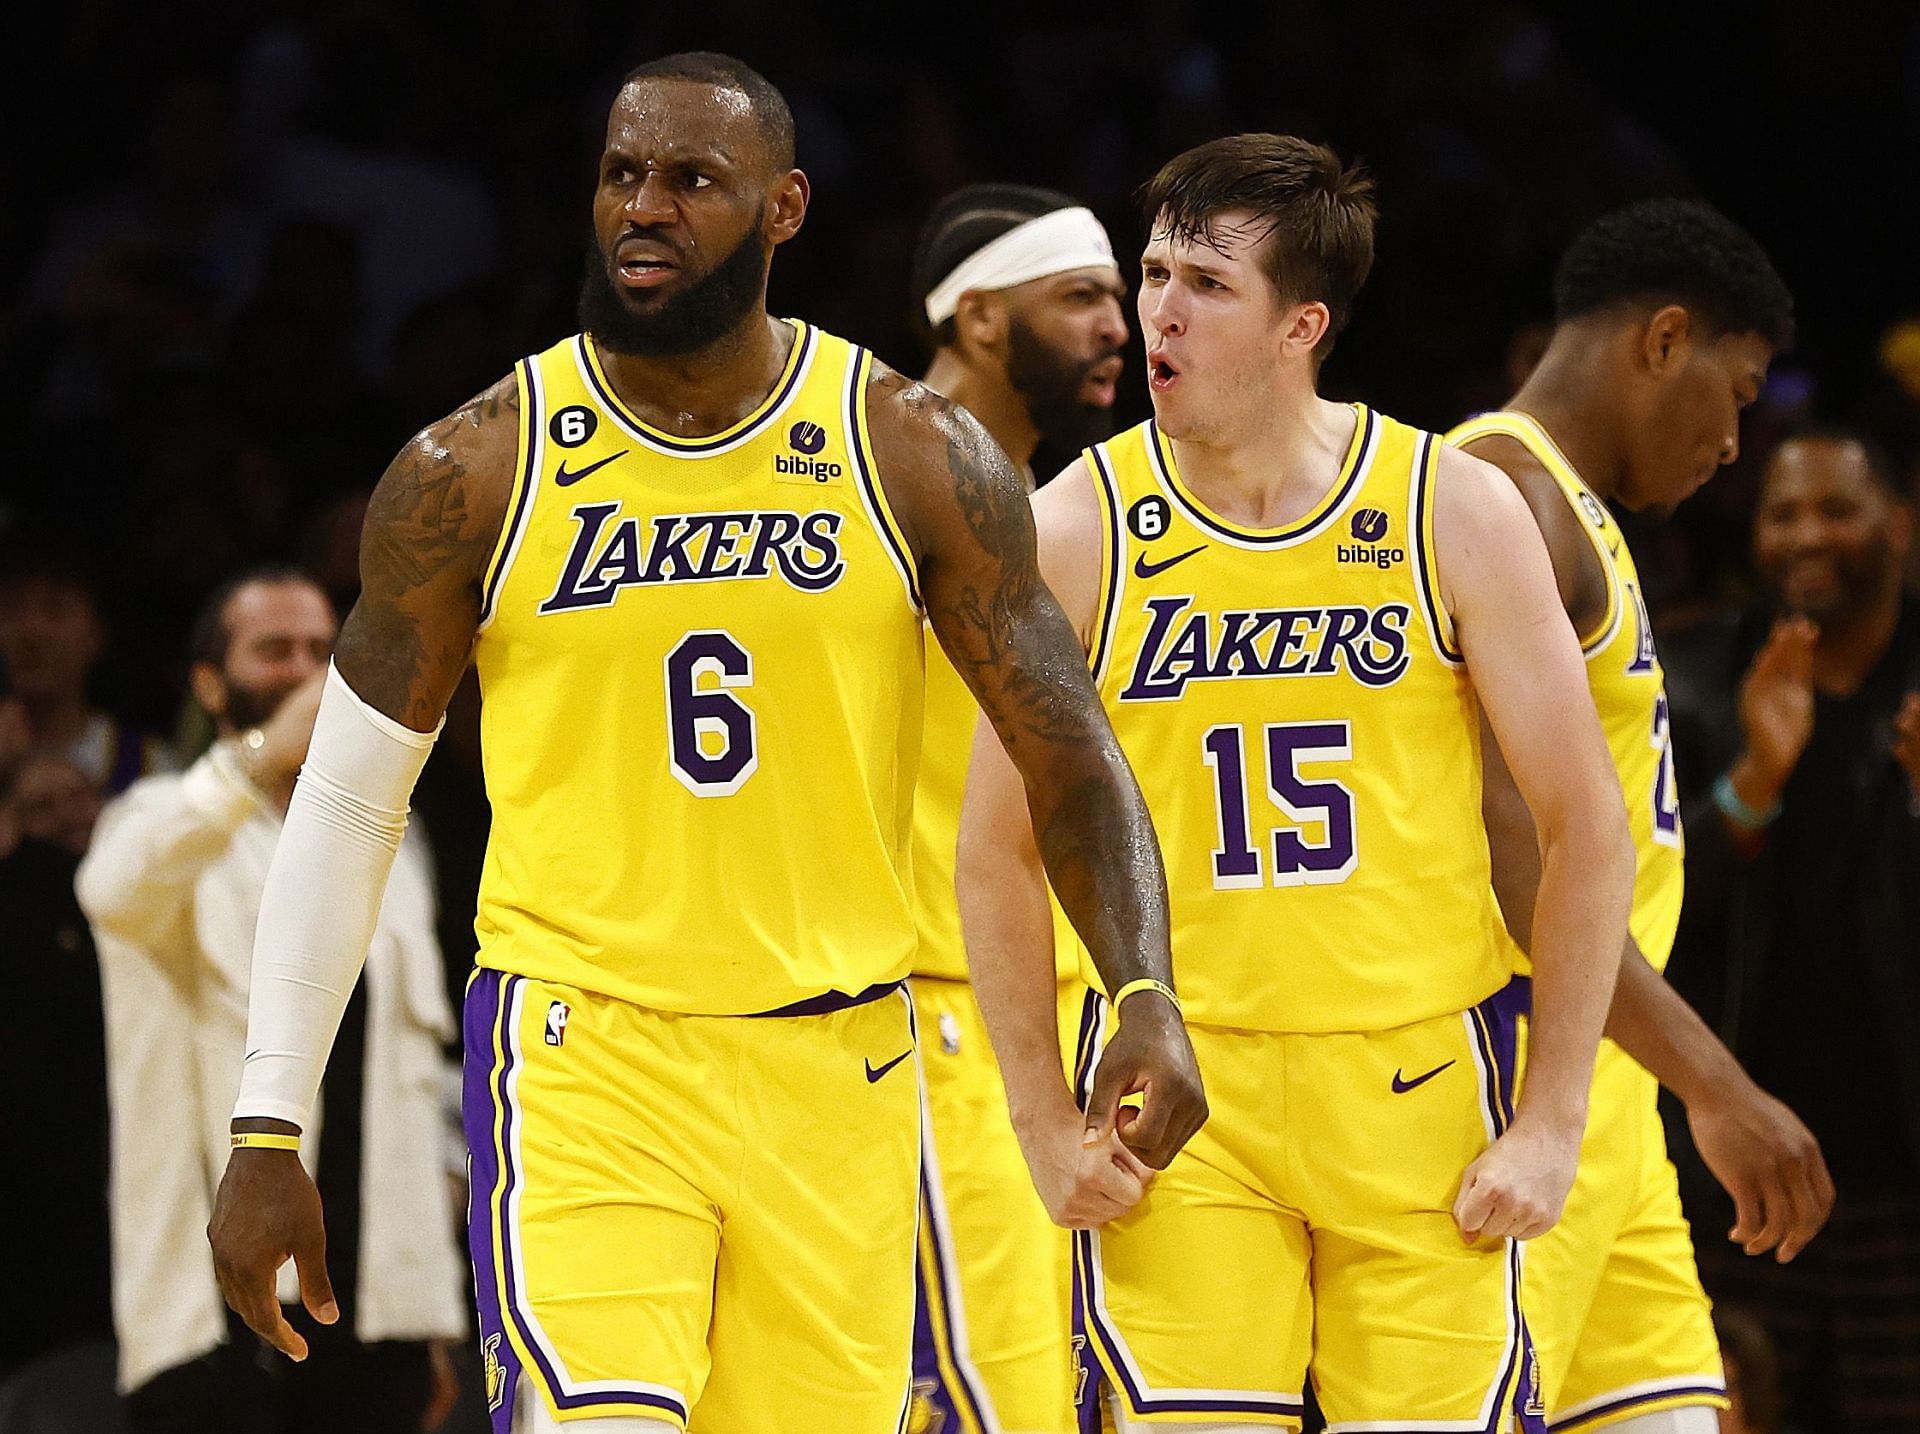 LA Lakers star forward LeBron James and Lakers second-year shooting guard Austin Reaves